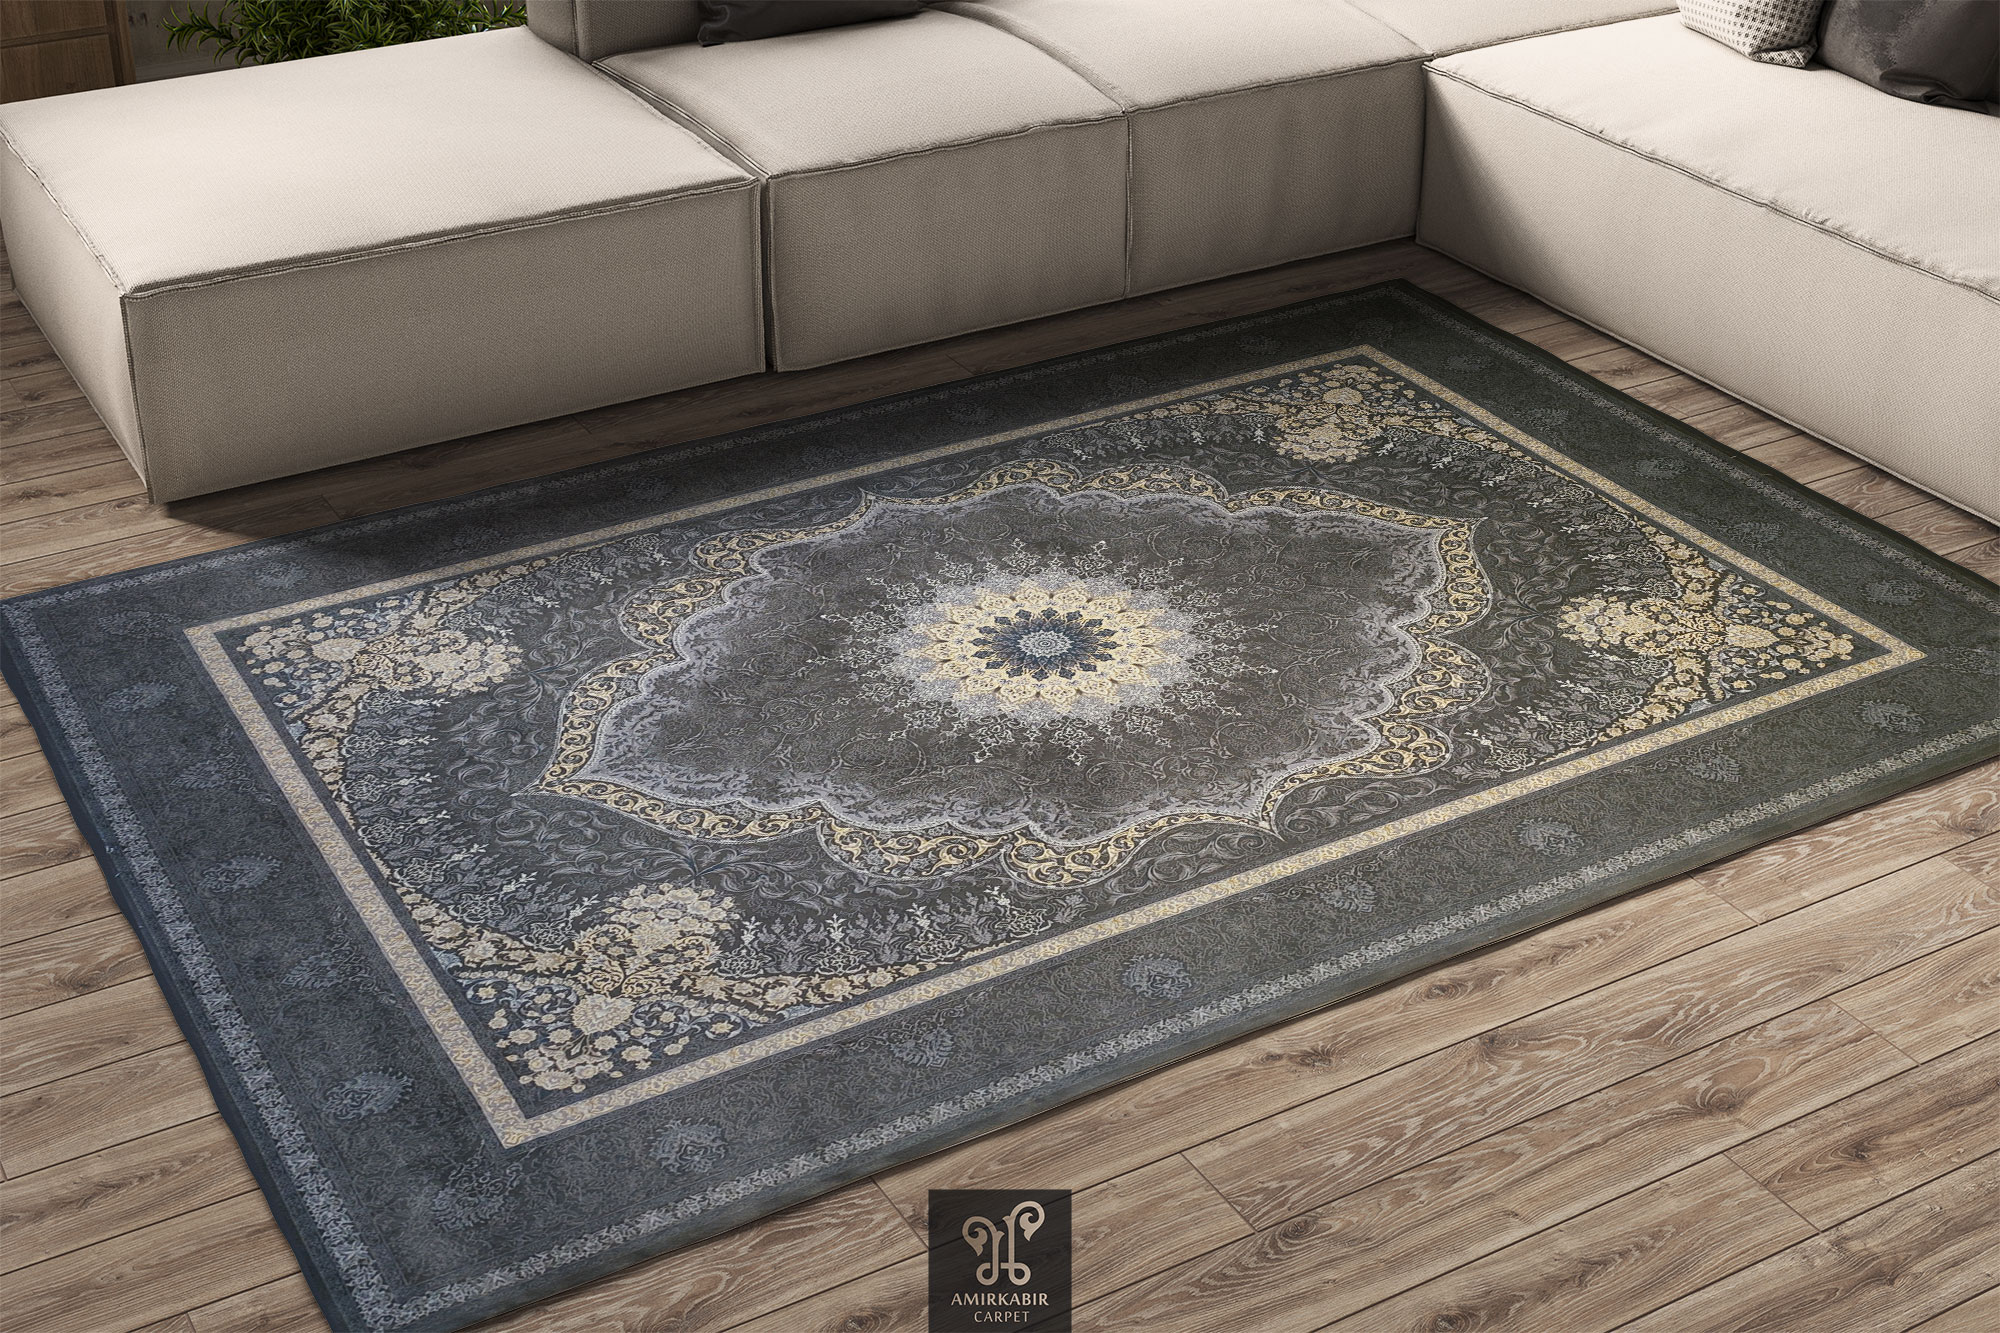 1200 reeds carpet Classic Persian Style - Smokey carpet- Tanin Smokey carpet